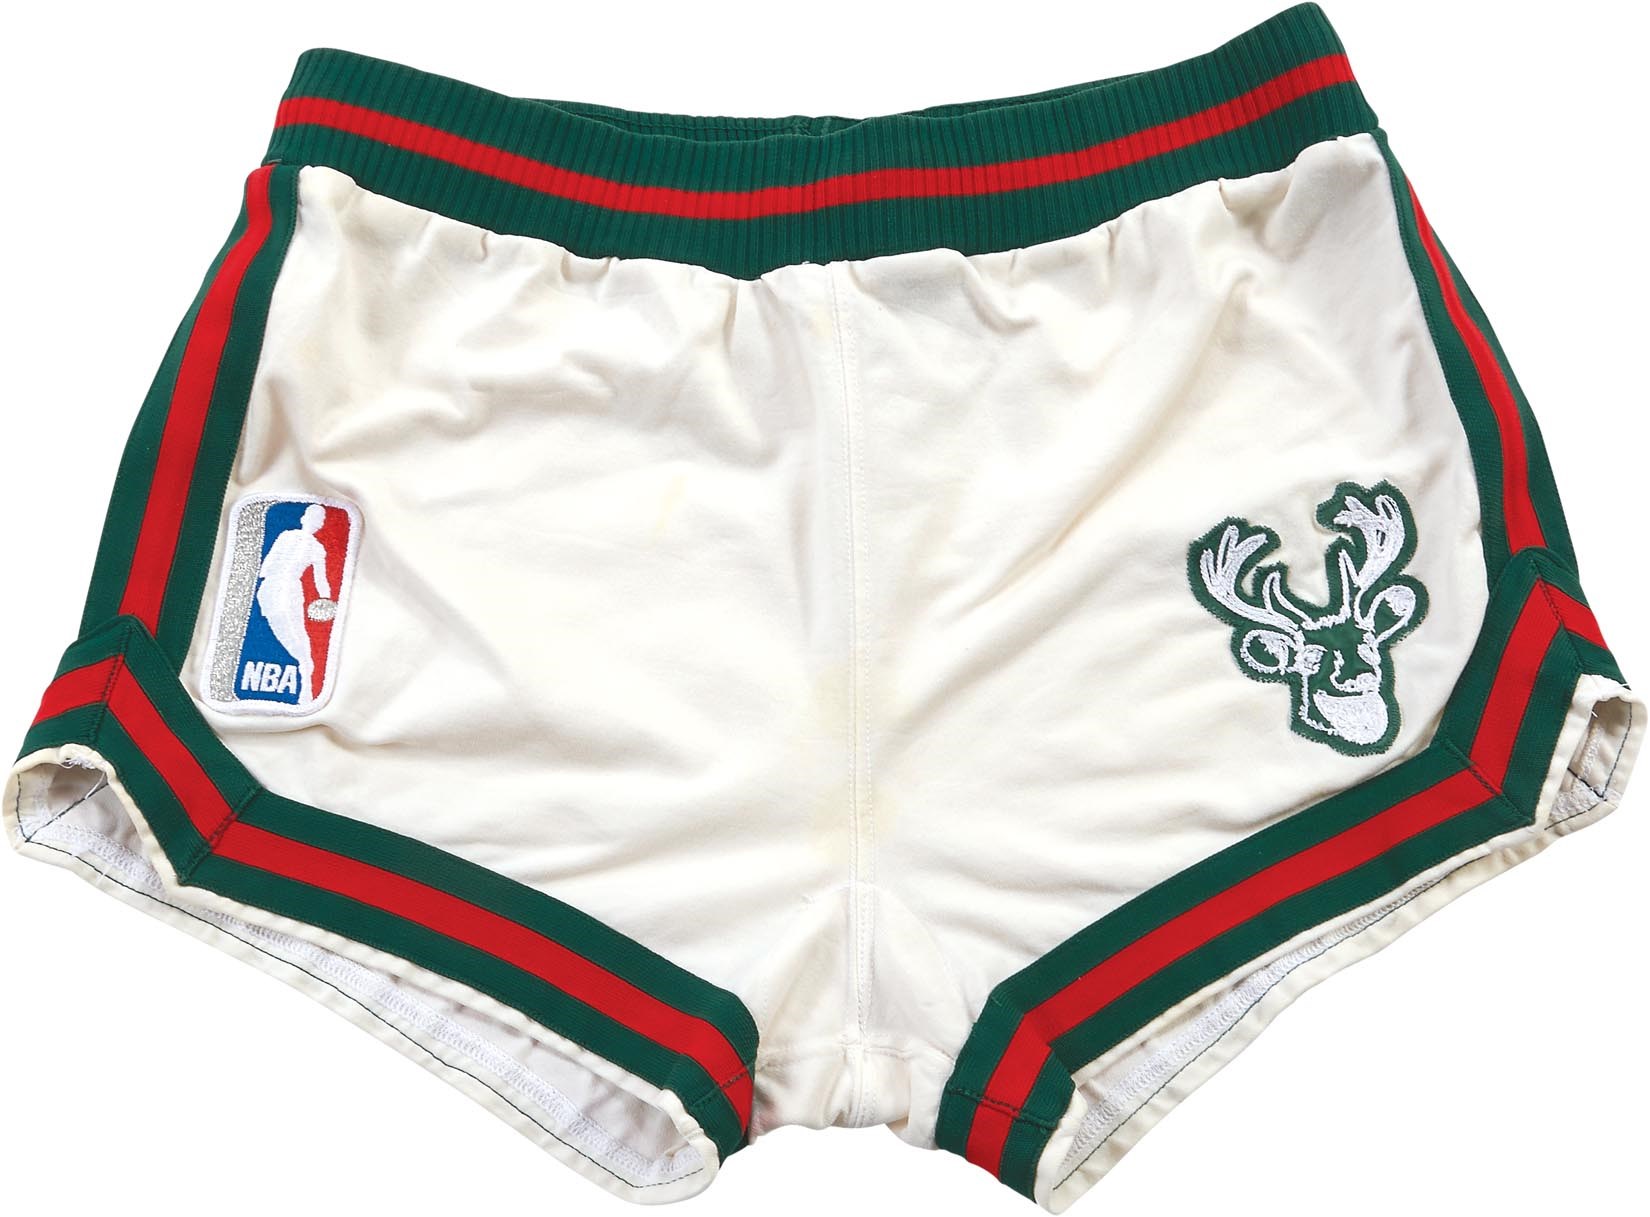 The Oscar Robertson Collection - Early 1970s Oscar Robertson Milwaukee Bucks Game Worn Shorts